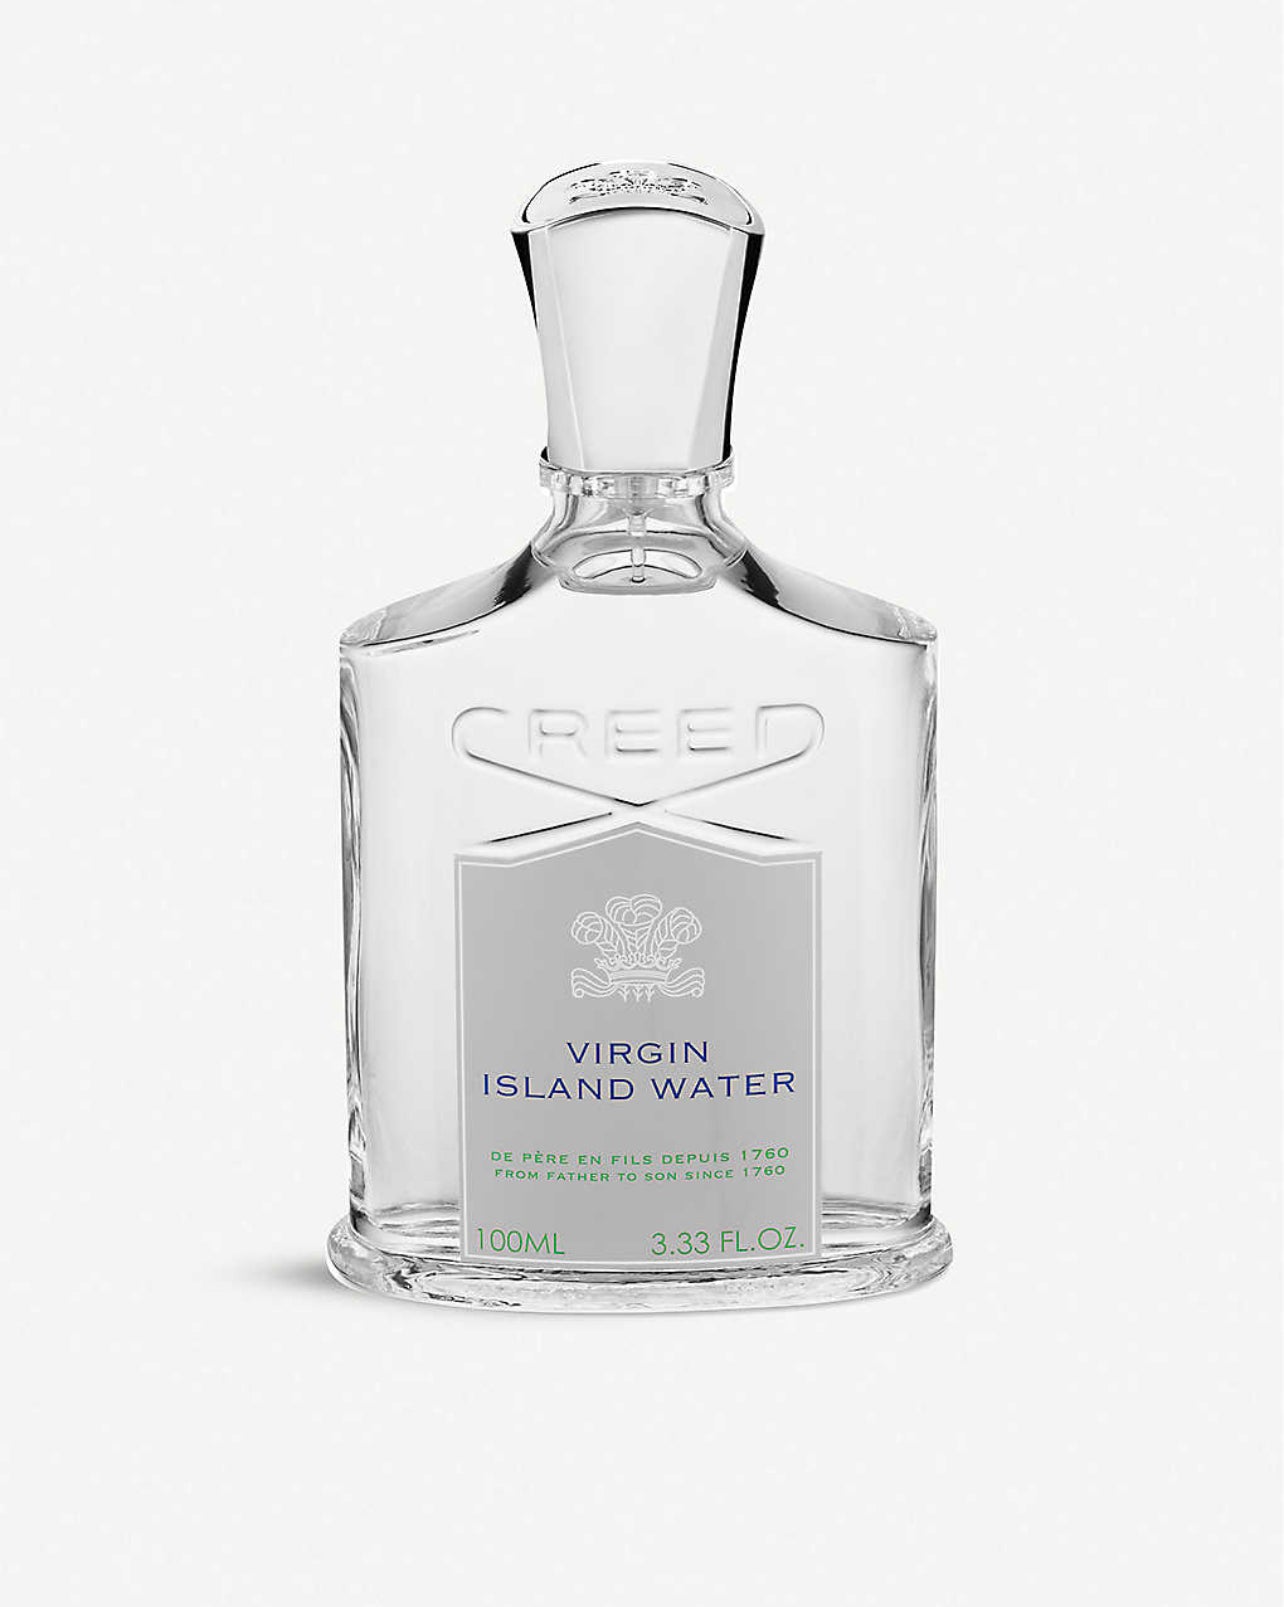 Creed Virgin Island Water Eau de Parfum Samples